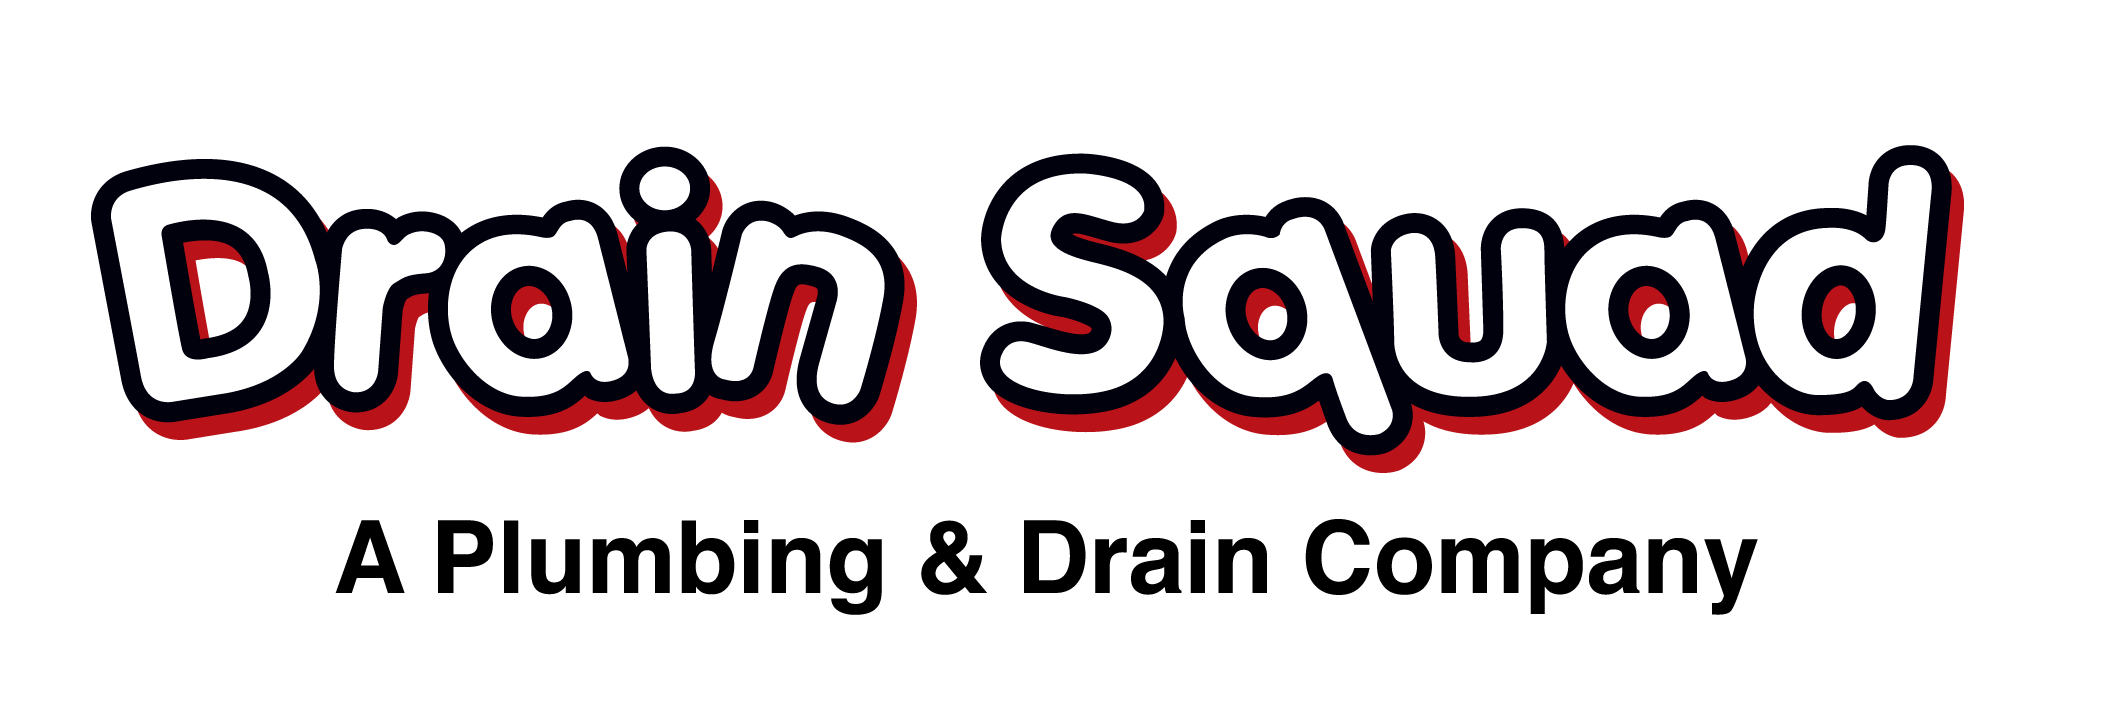 Drain Squad, A Plumbing & Drain Company, LLC Logo